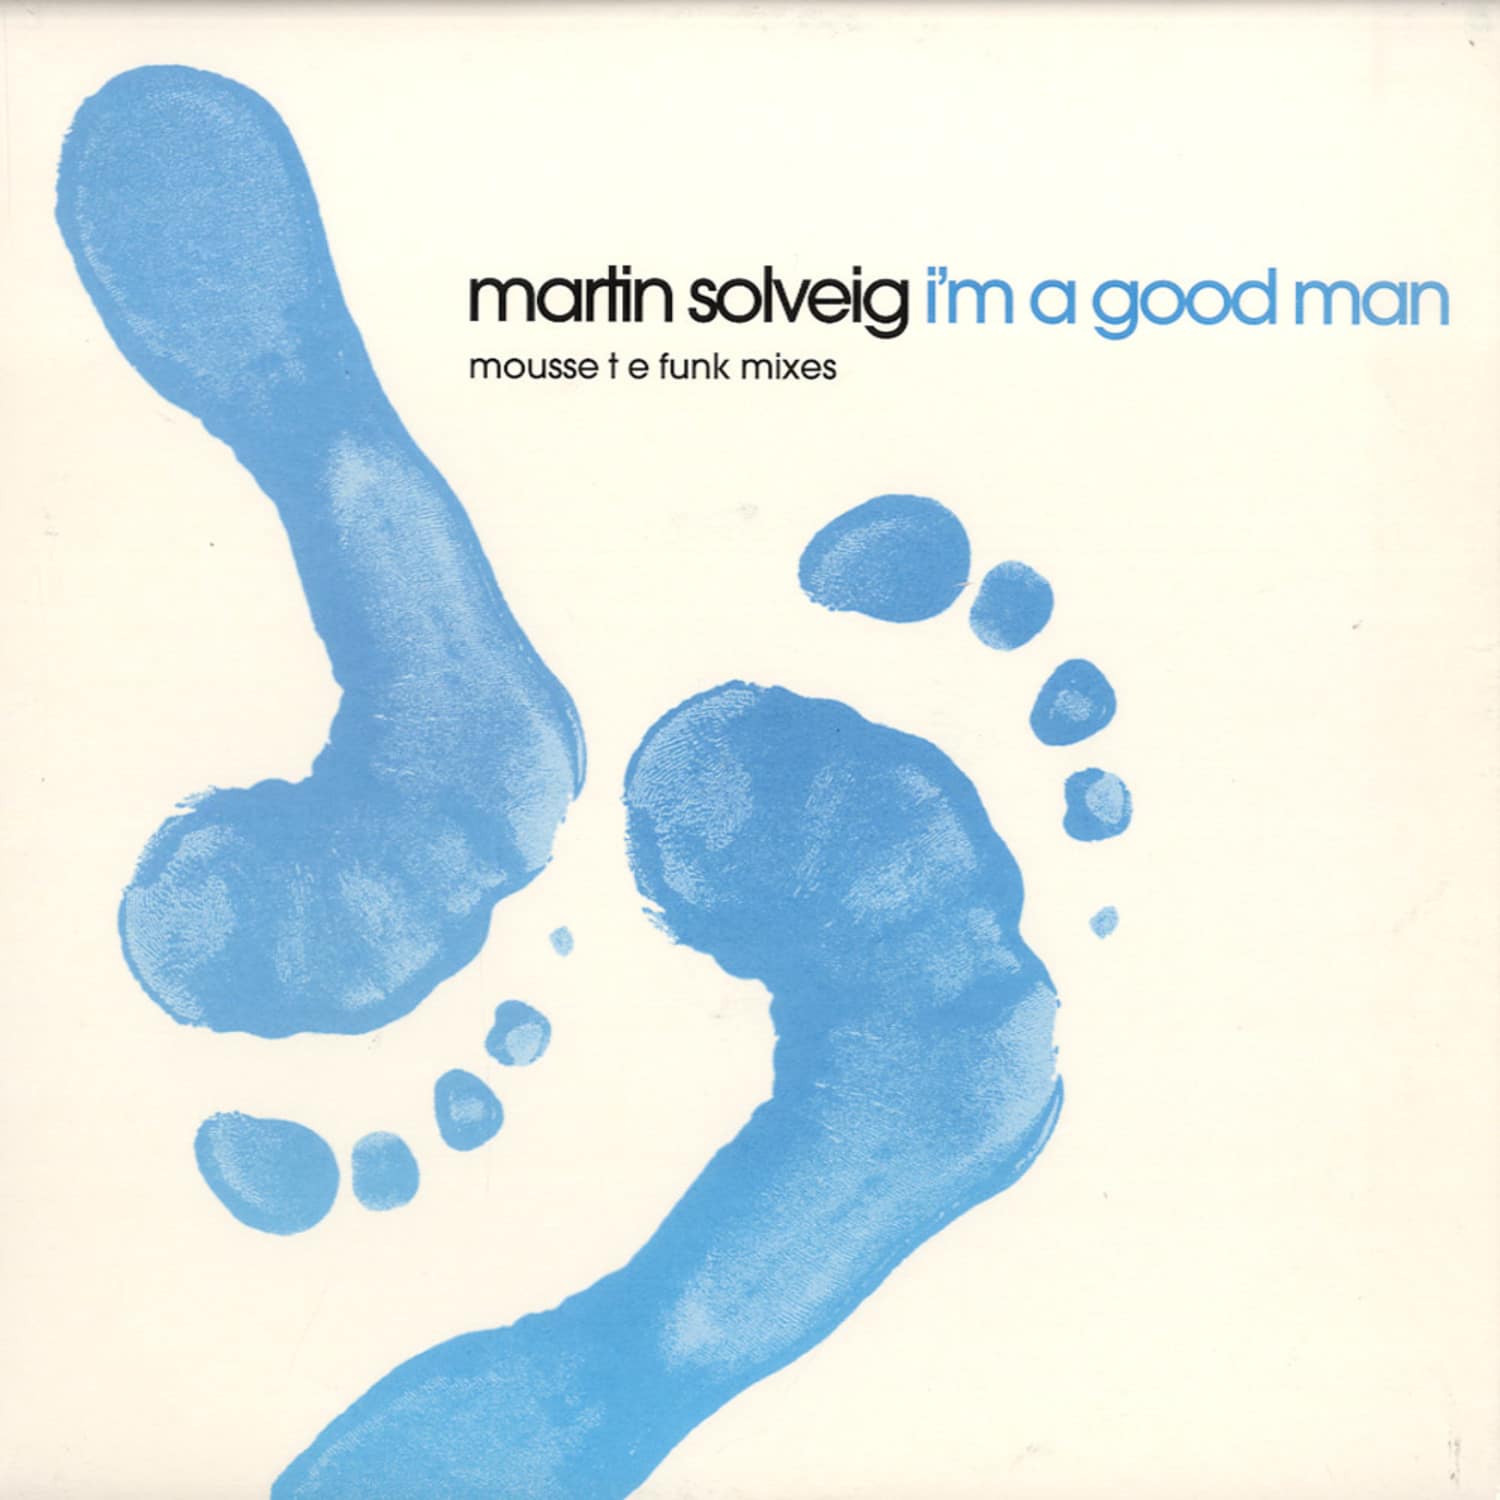 Martin Solveig - I M A GOOD MAN 